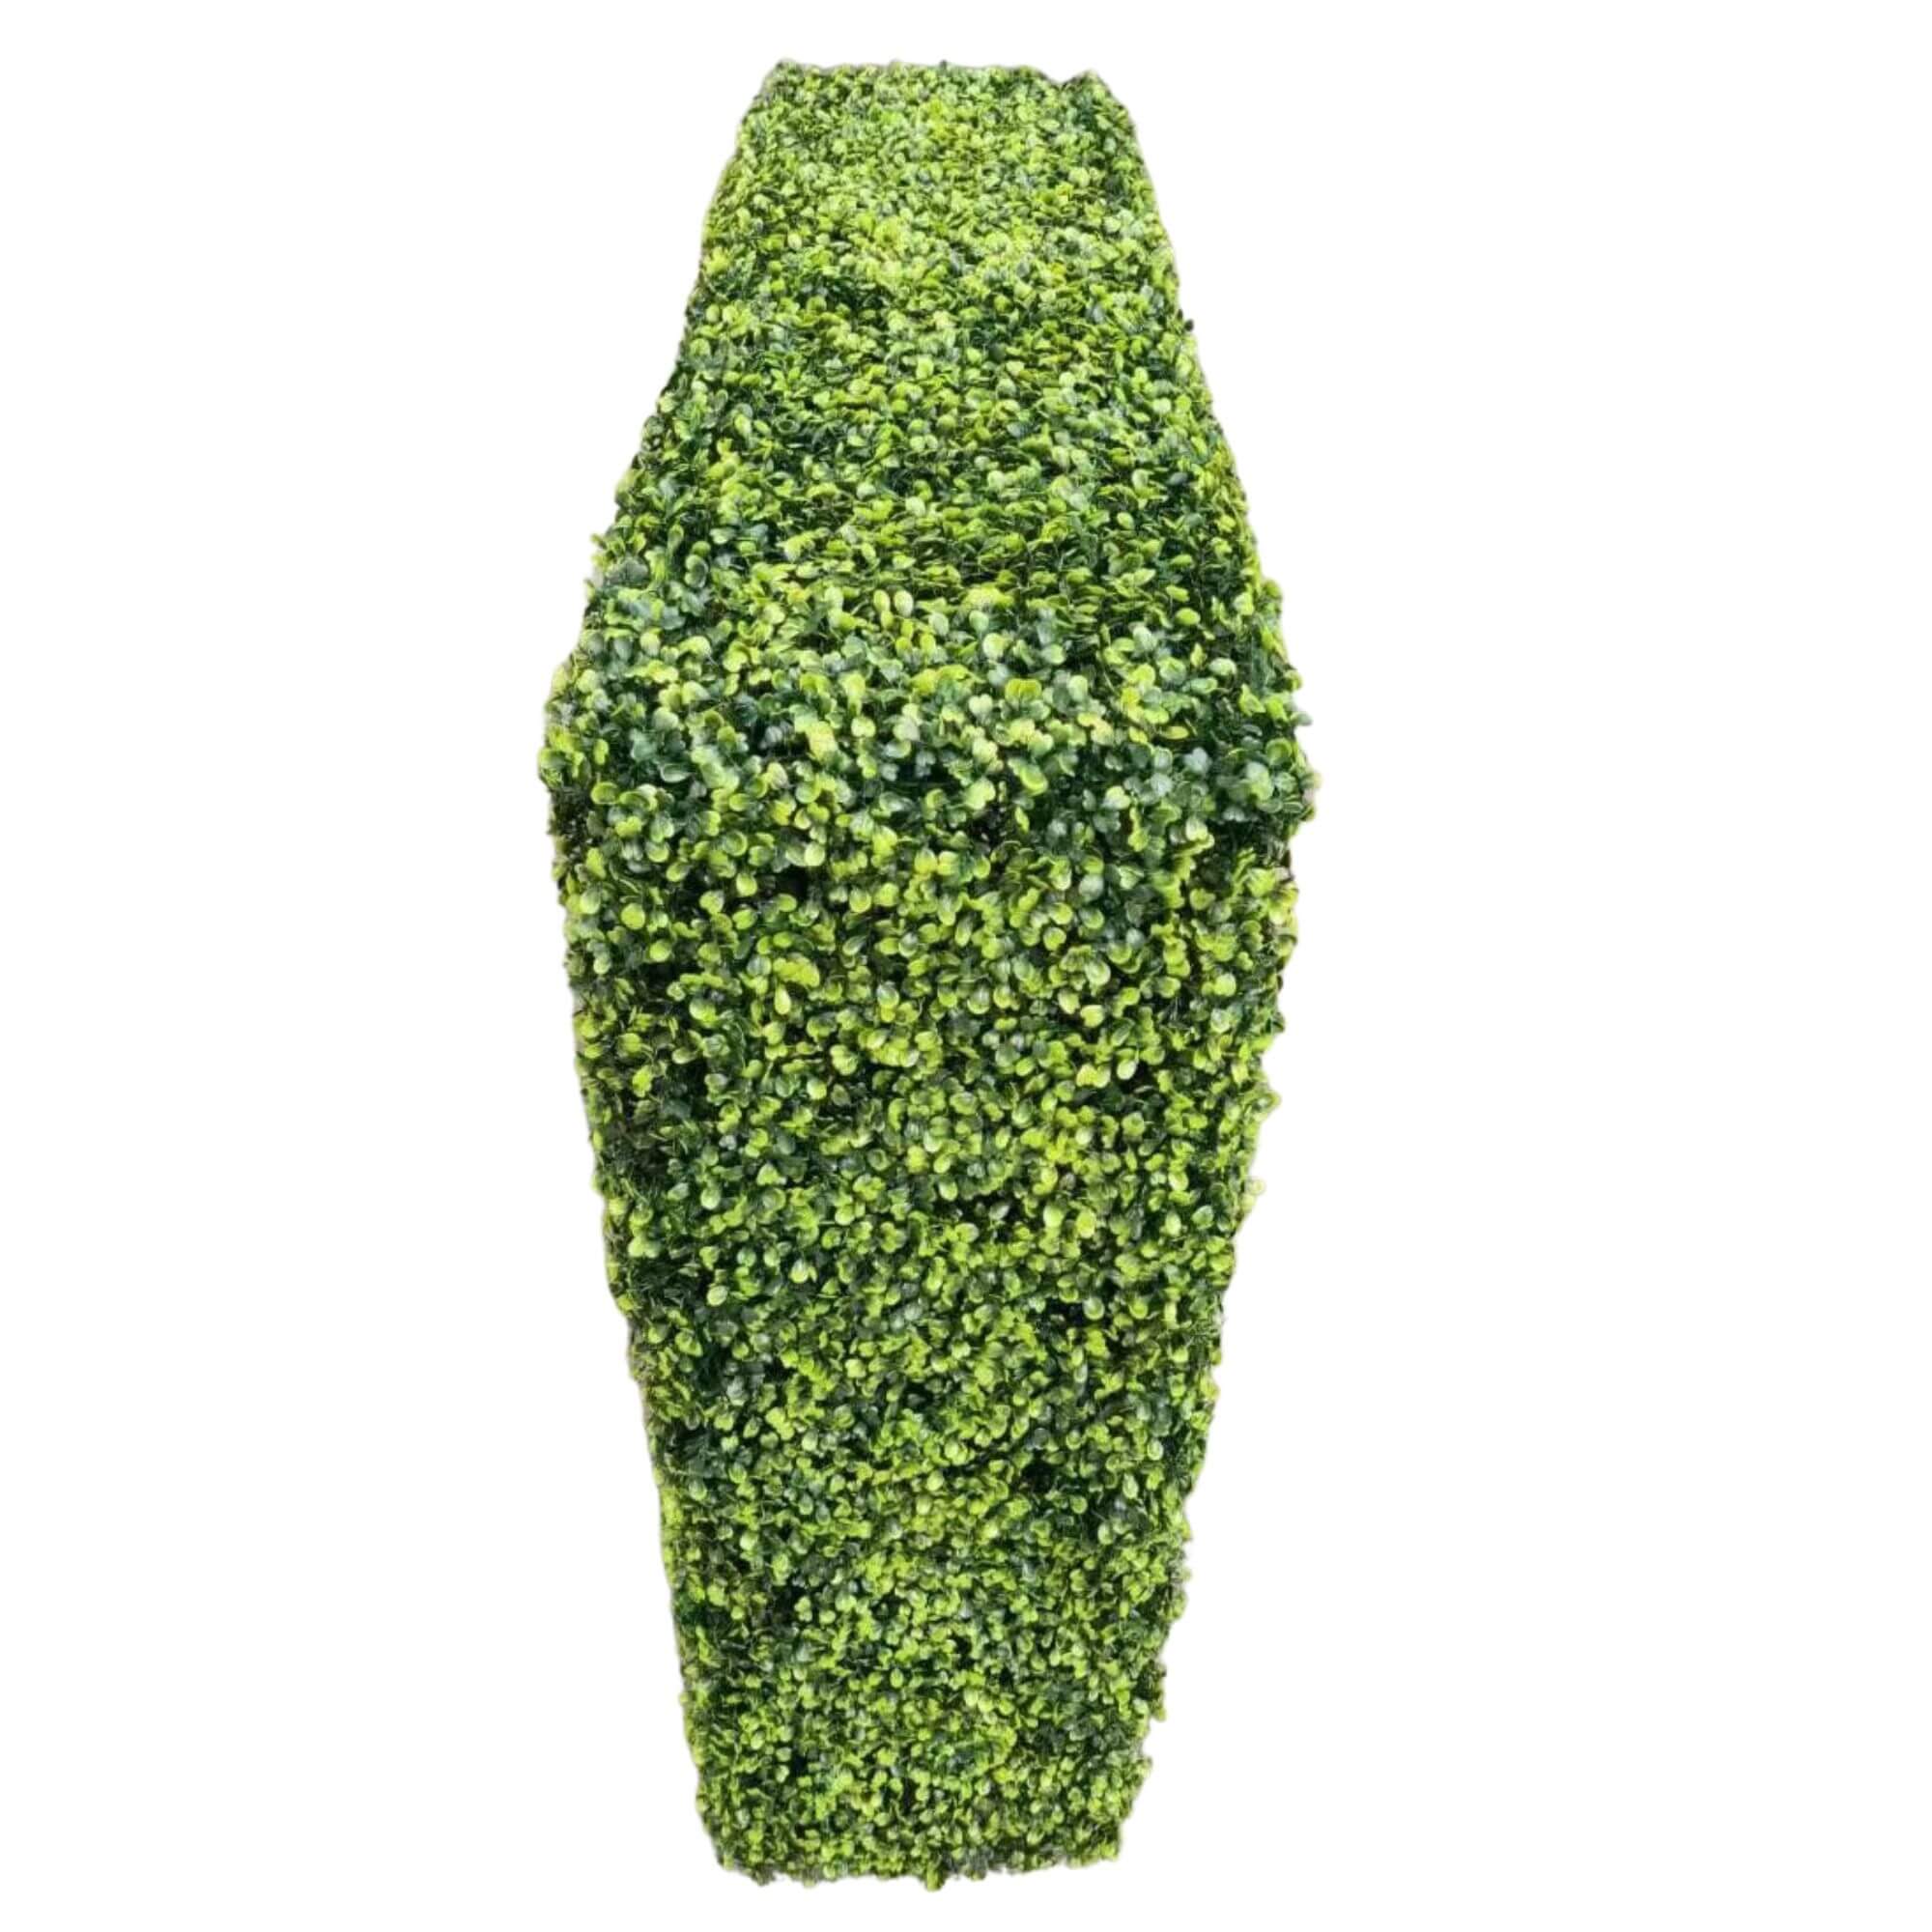 UV Resistant Portable Light Boxwood Artificial Hedge - 1m High x 1m Wide x 30cm Deep - Designer Vertical Gardens artificial garden wall plants artificial green wall australia